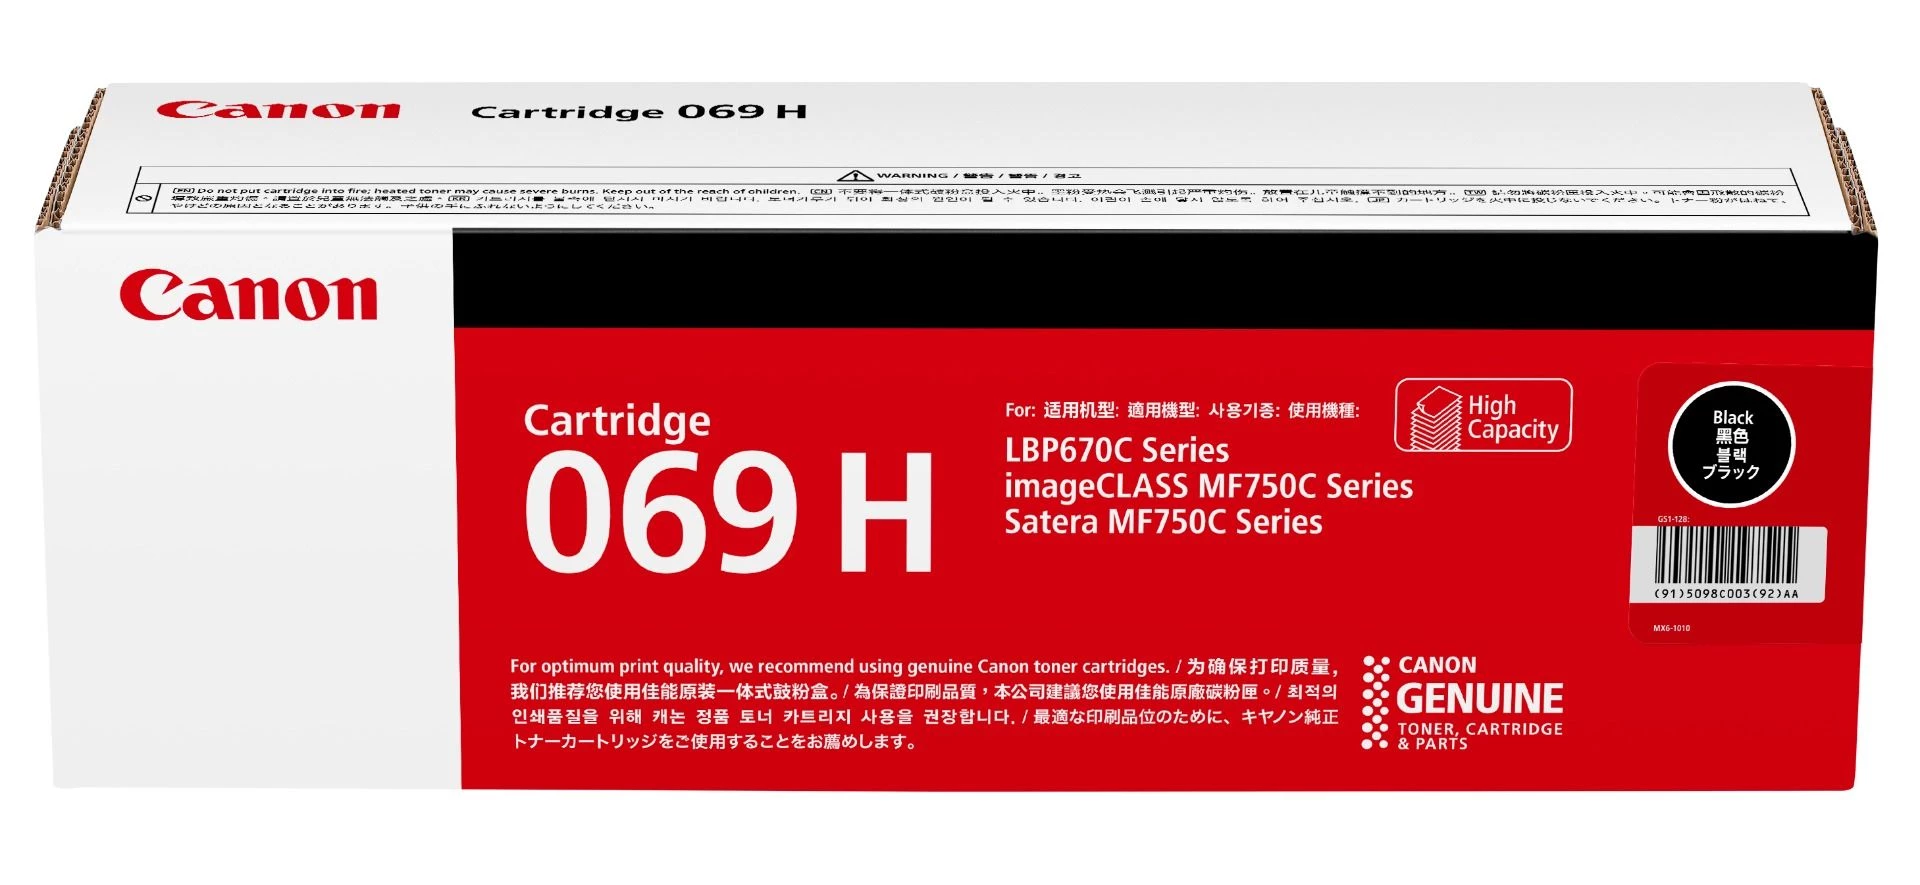 Canon Cartridge 069H BK Black Toner Cartridge (High Capacity)